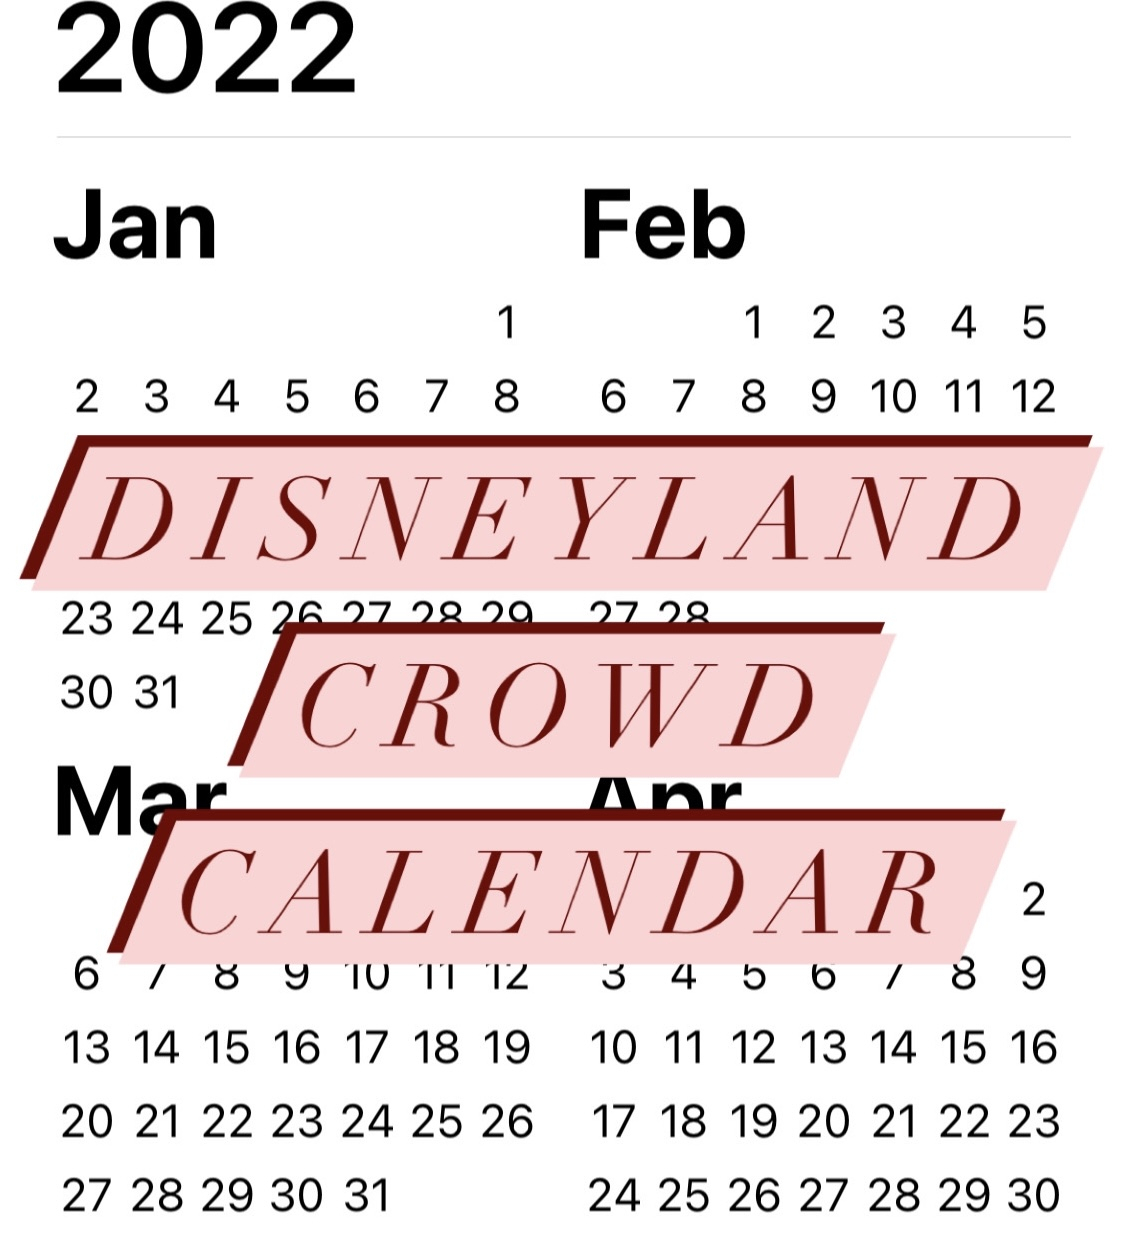 Disneyland 2022 Crowd Calendar - Disneyland Resort Tips